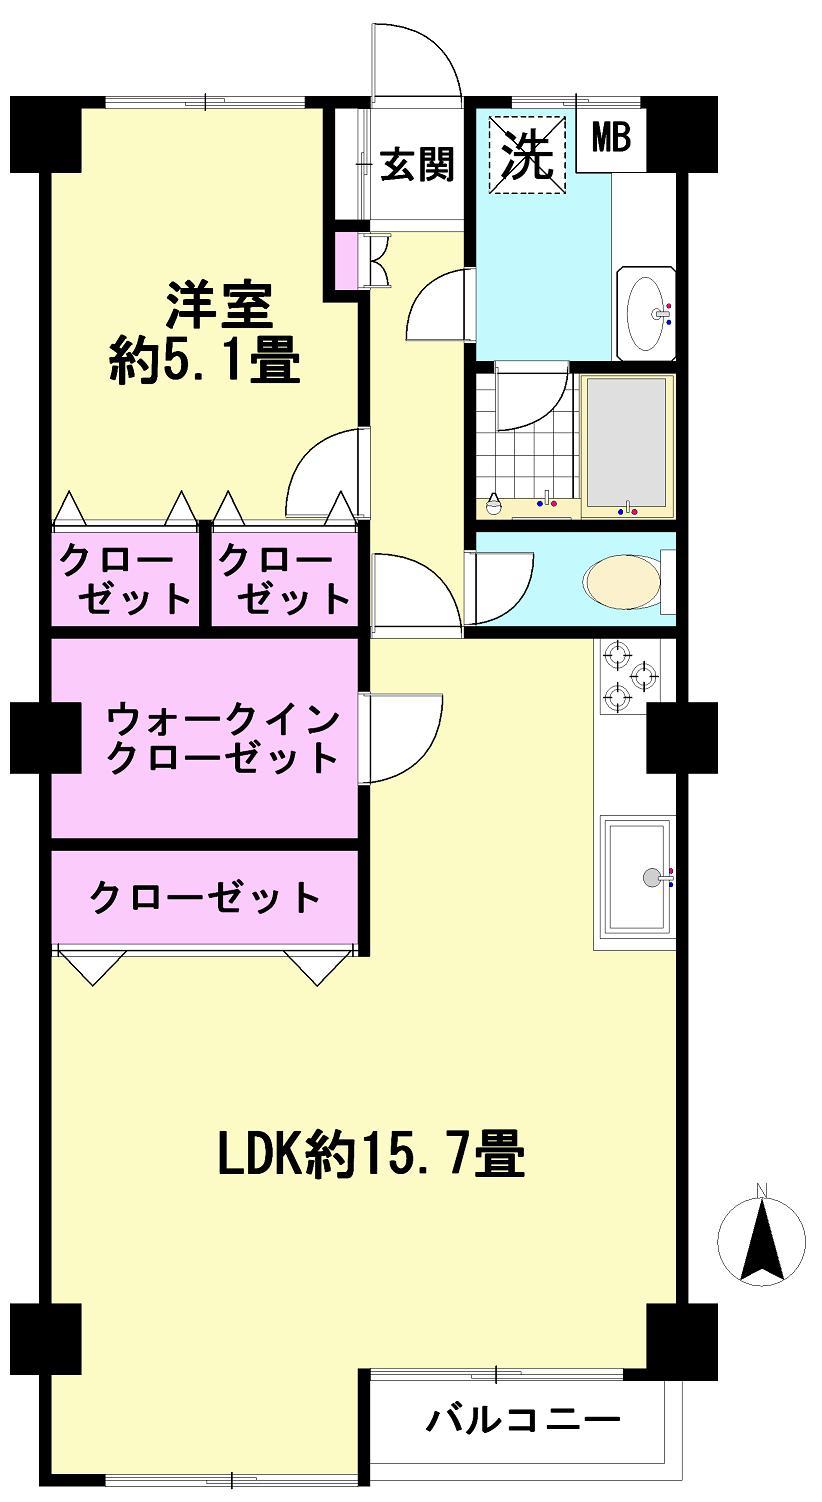 Floor plan. 1LDK, Price 13.8 million yen, Occupied area 62.37 sq m , Balcony area 2.43 sq m